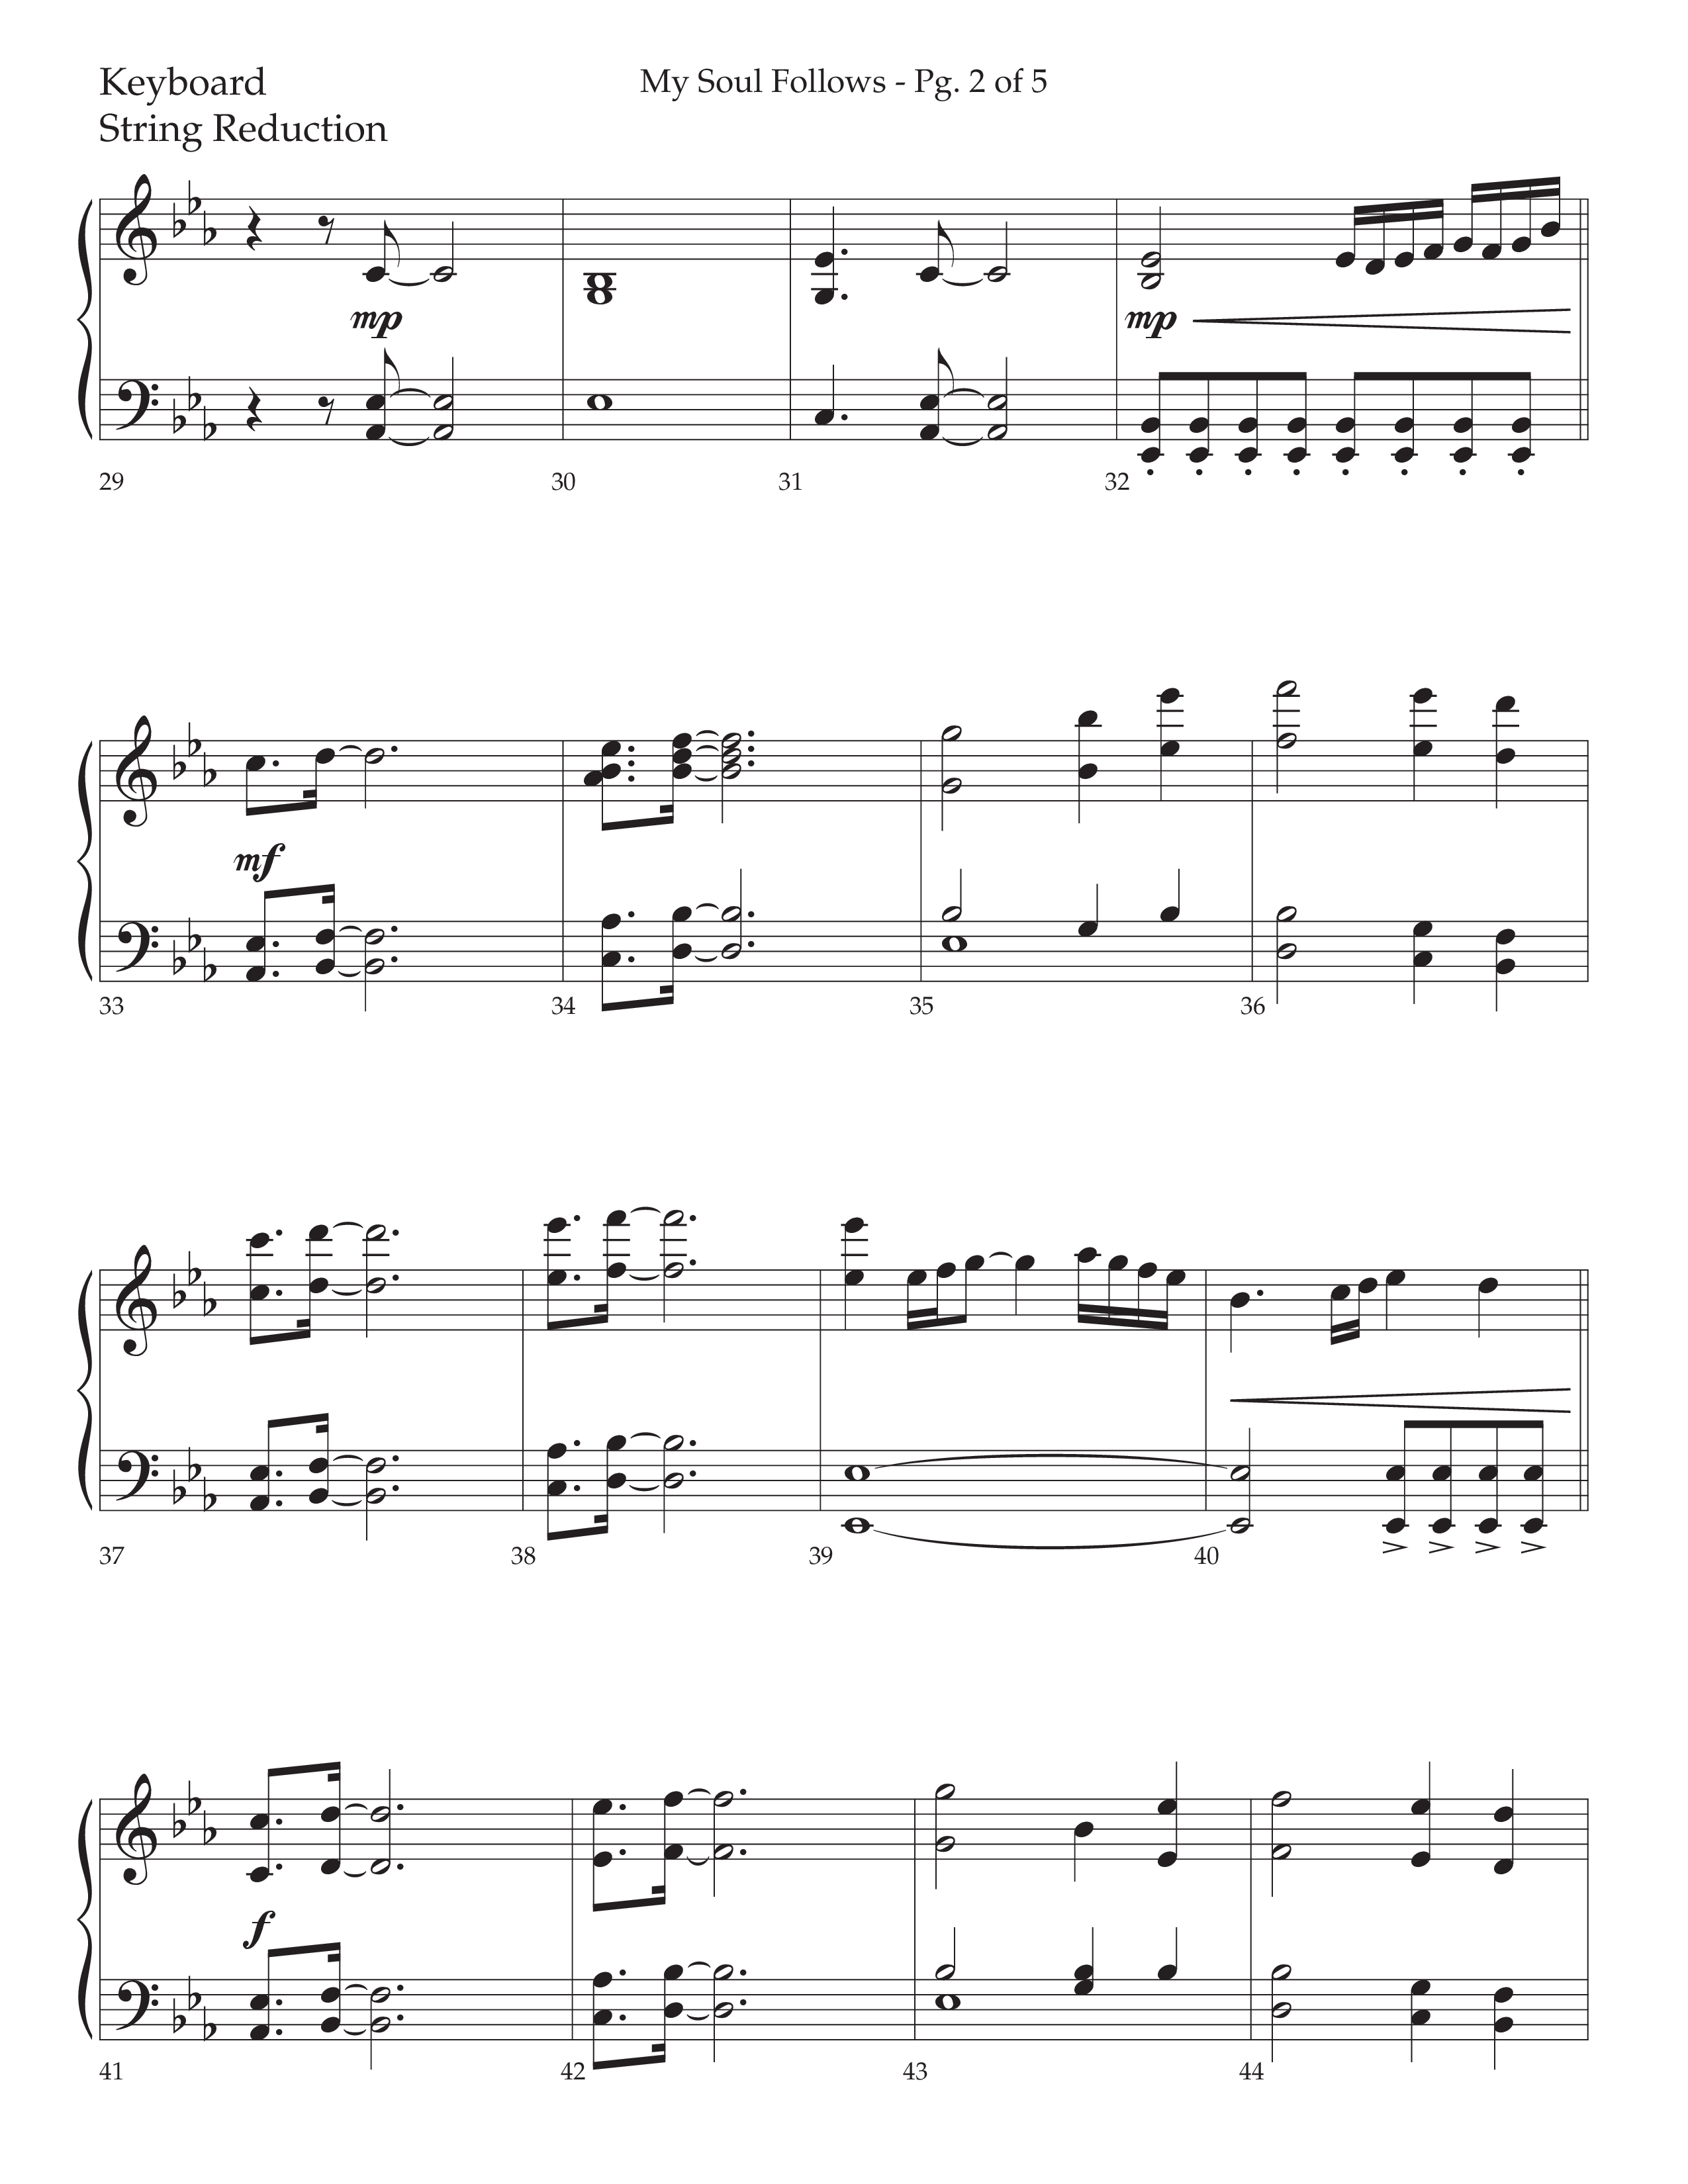 My Soul Follows (Choral Anthem SATB) String Reduction (Lifeway Choral / Arr. Nick Robertson)